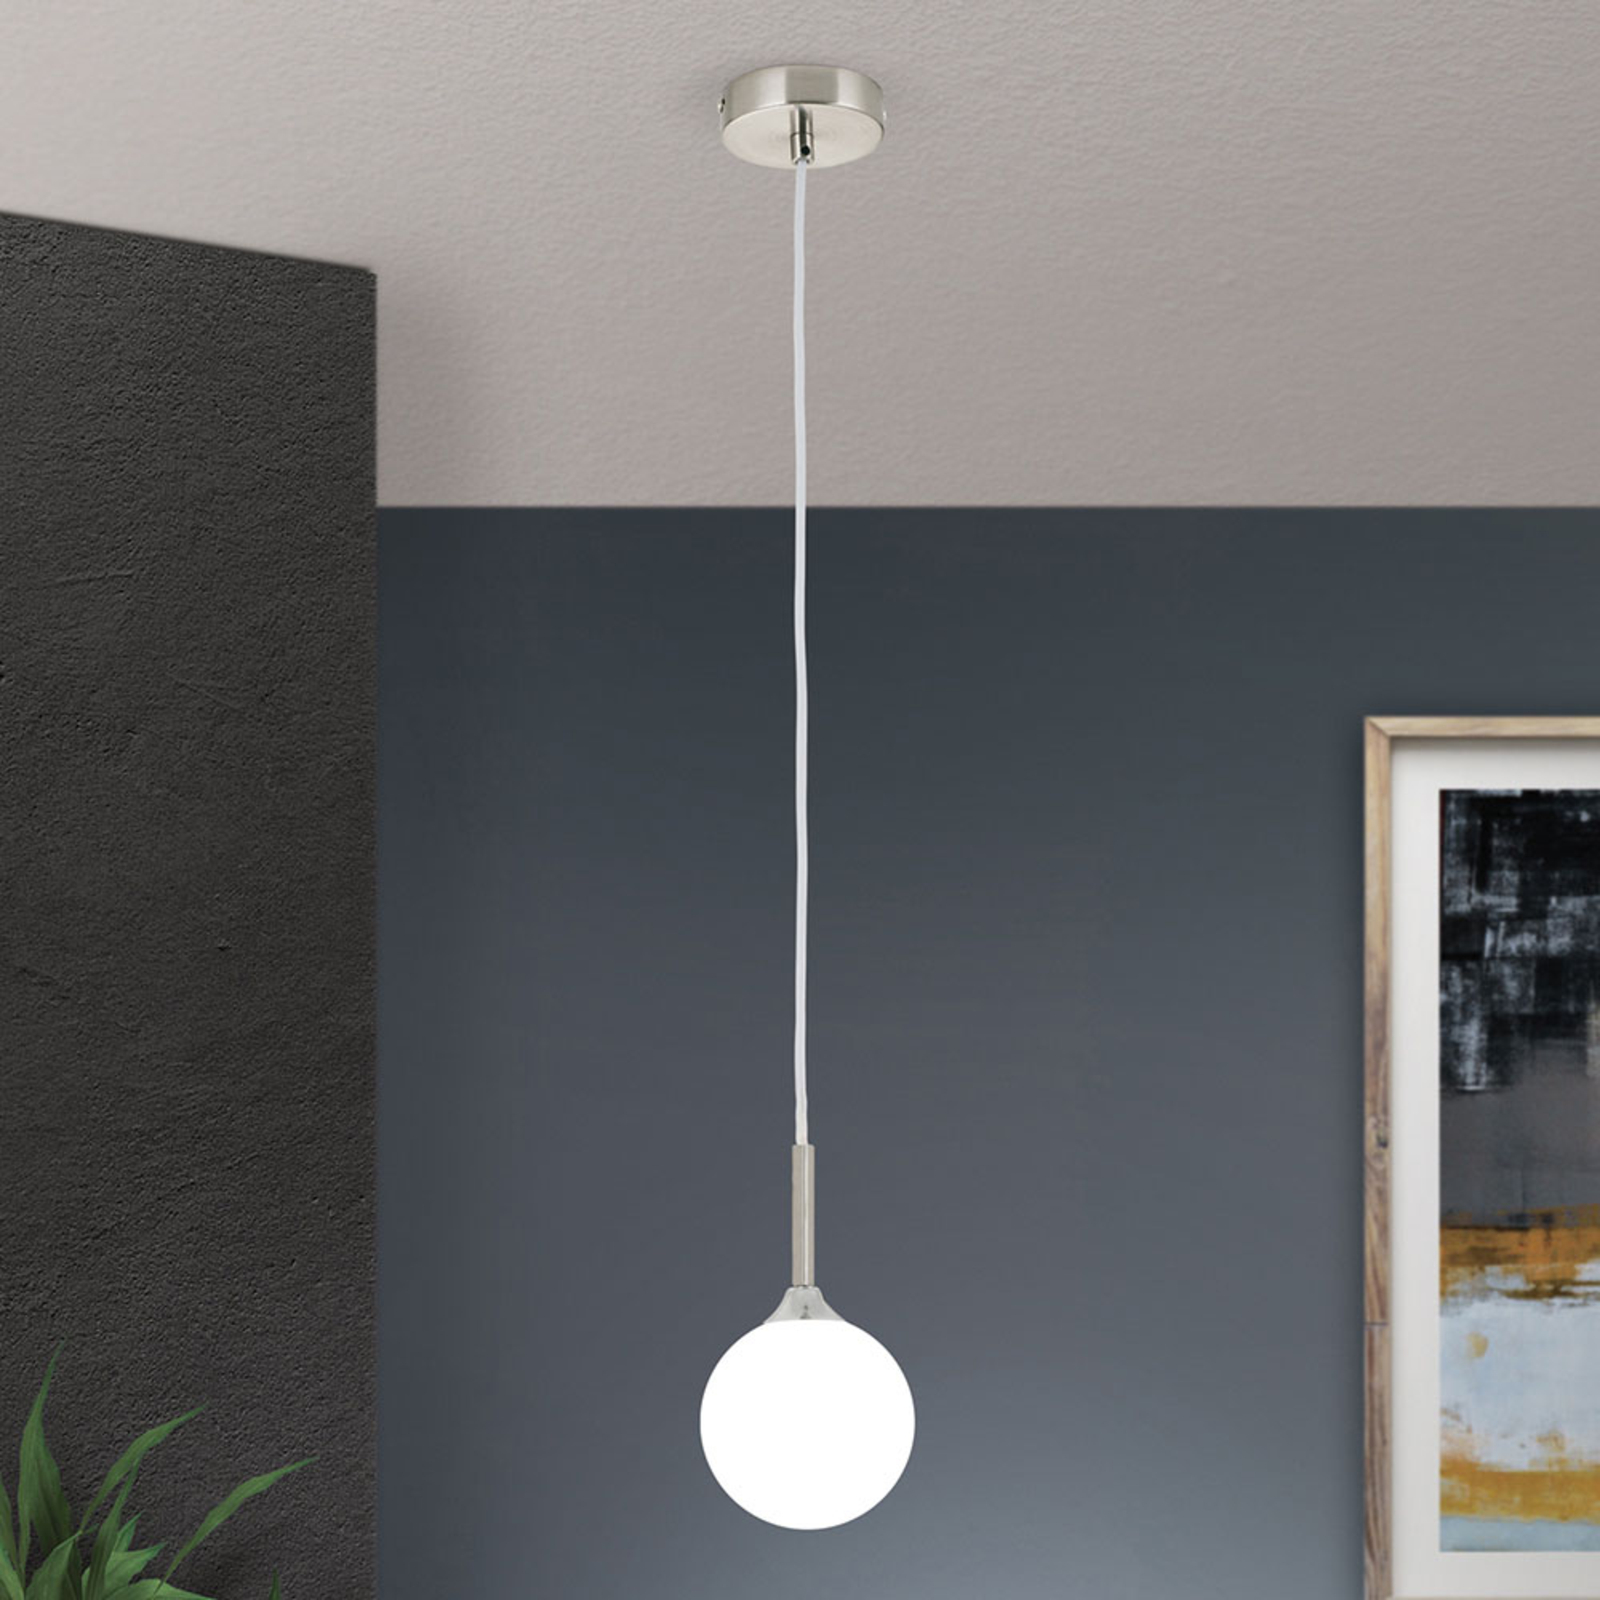 Snowwhite hanging light, one-bulb, nickel